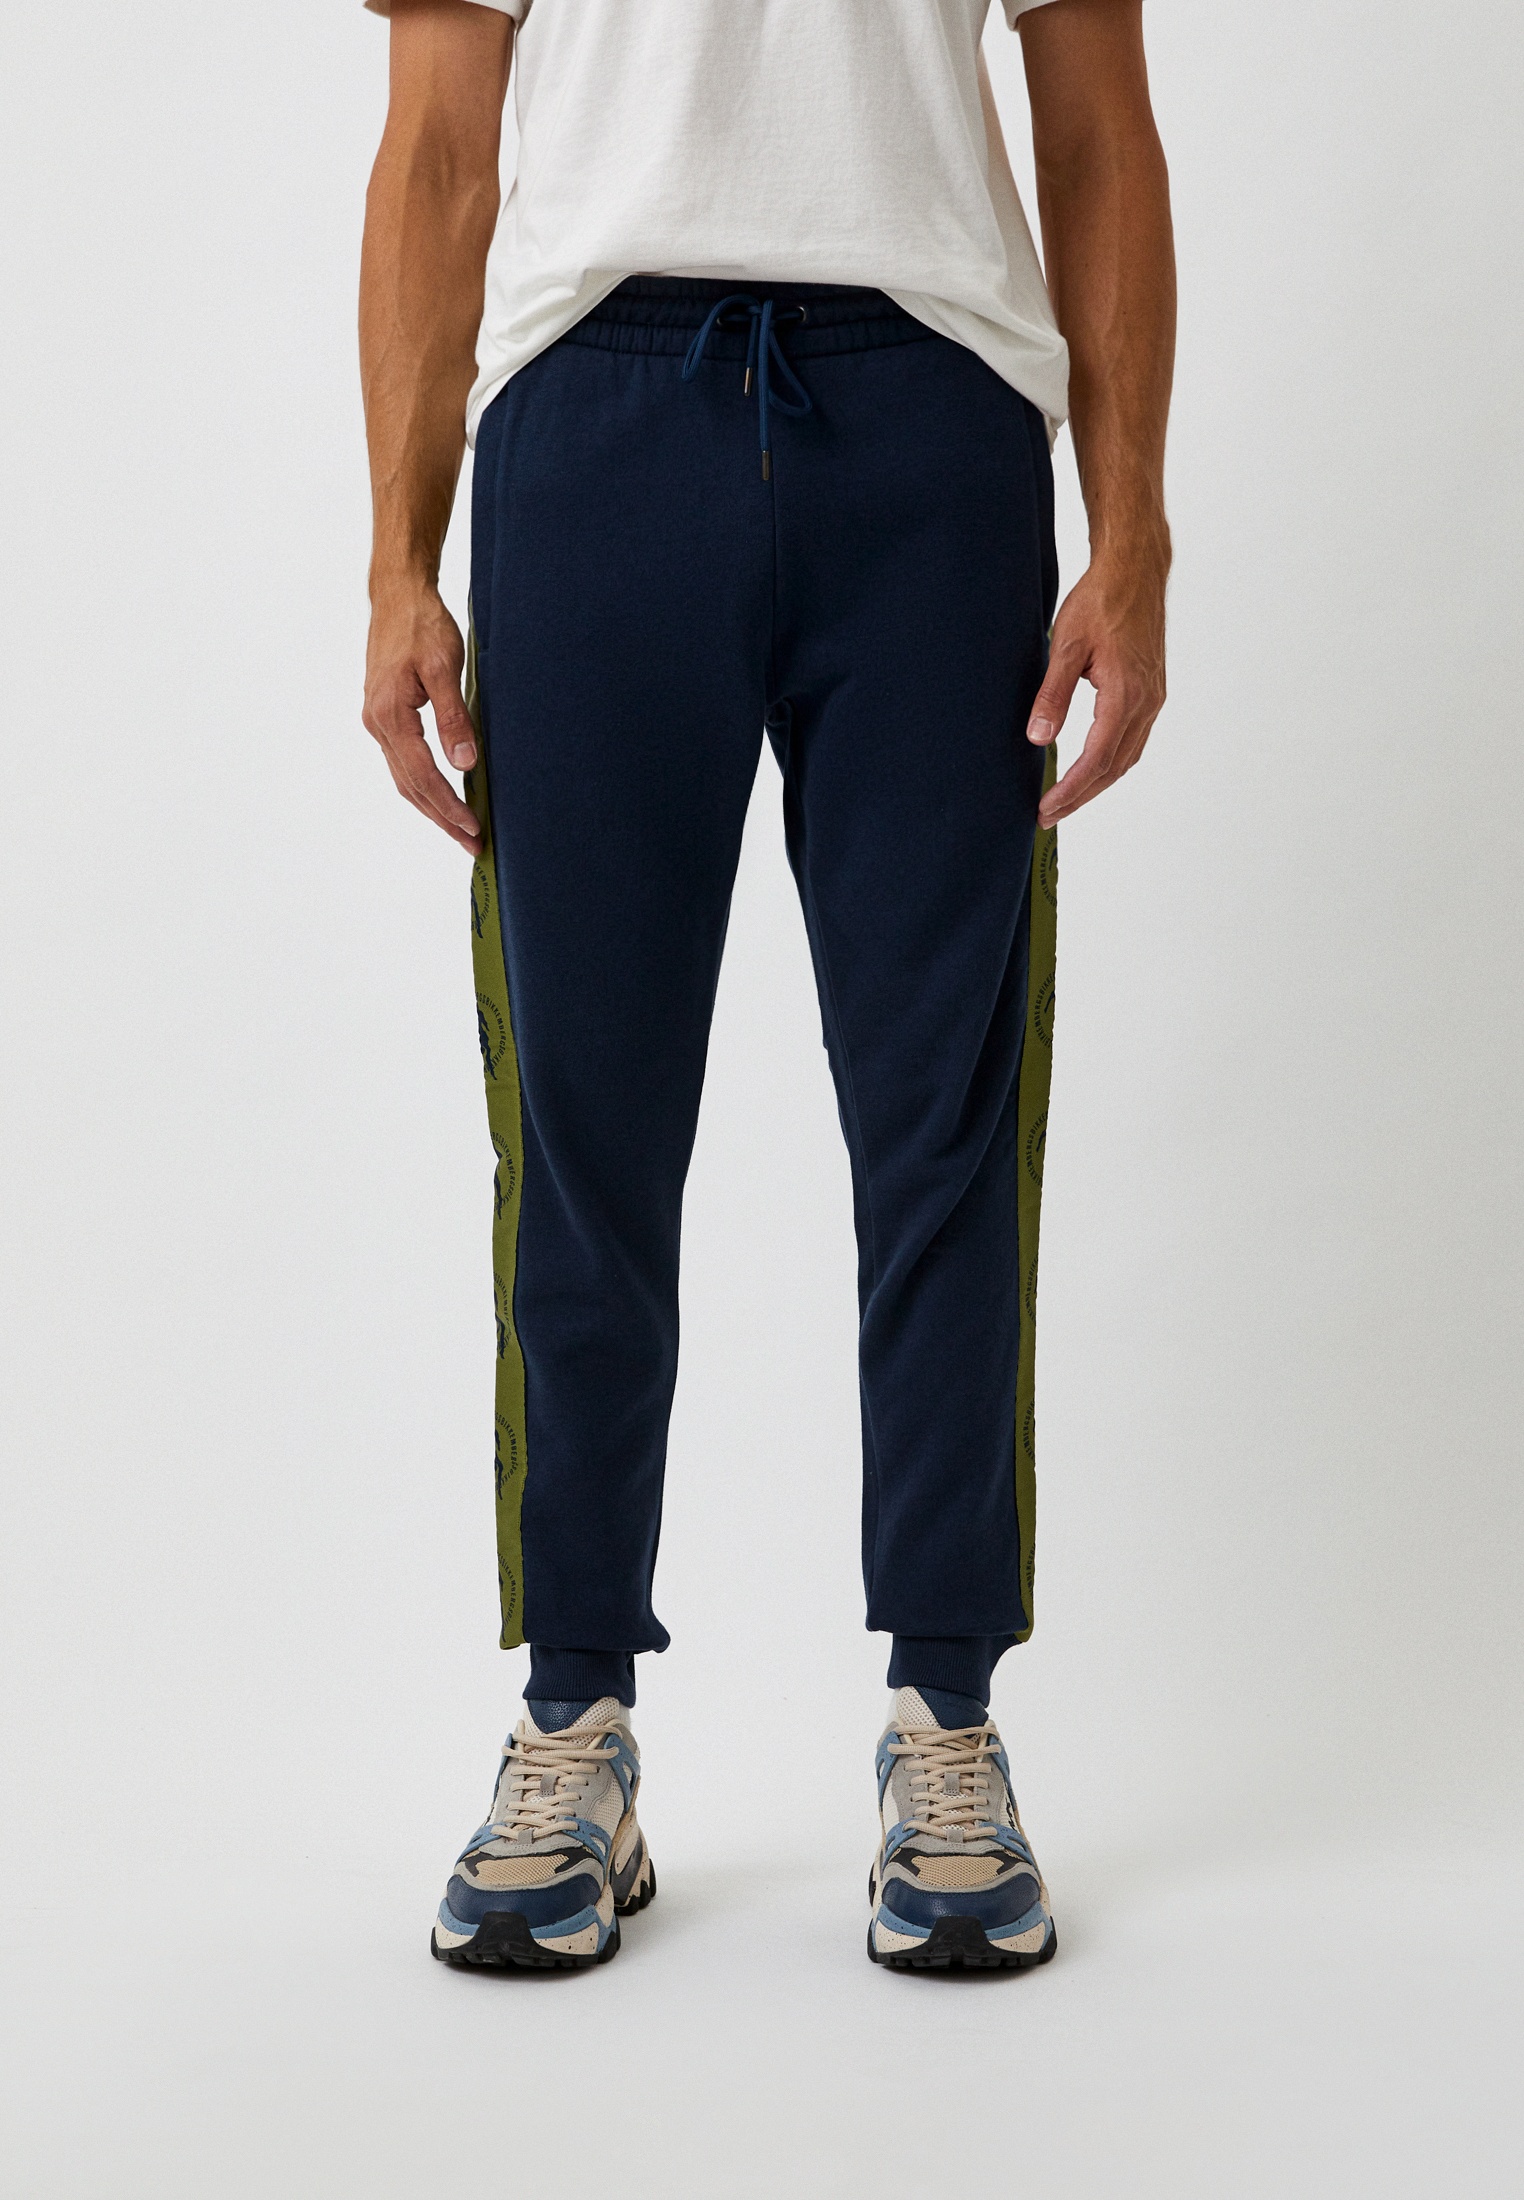 Мужские спортивные брюки Bikkembergs (Биккембергс) C 1 226 80 M 4326